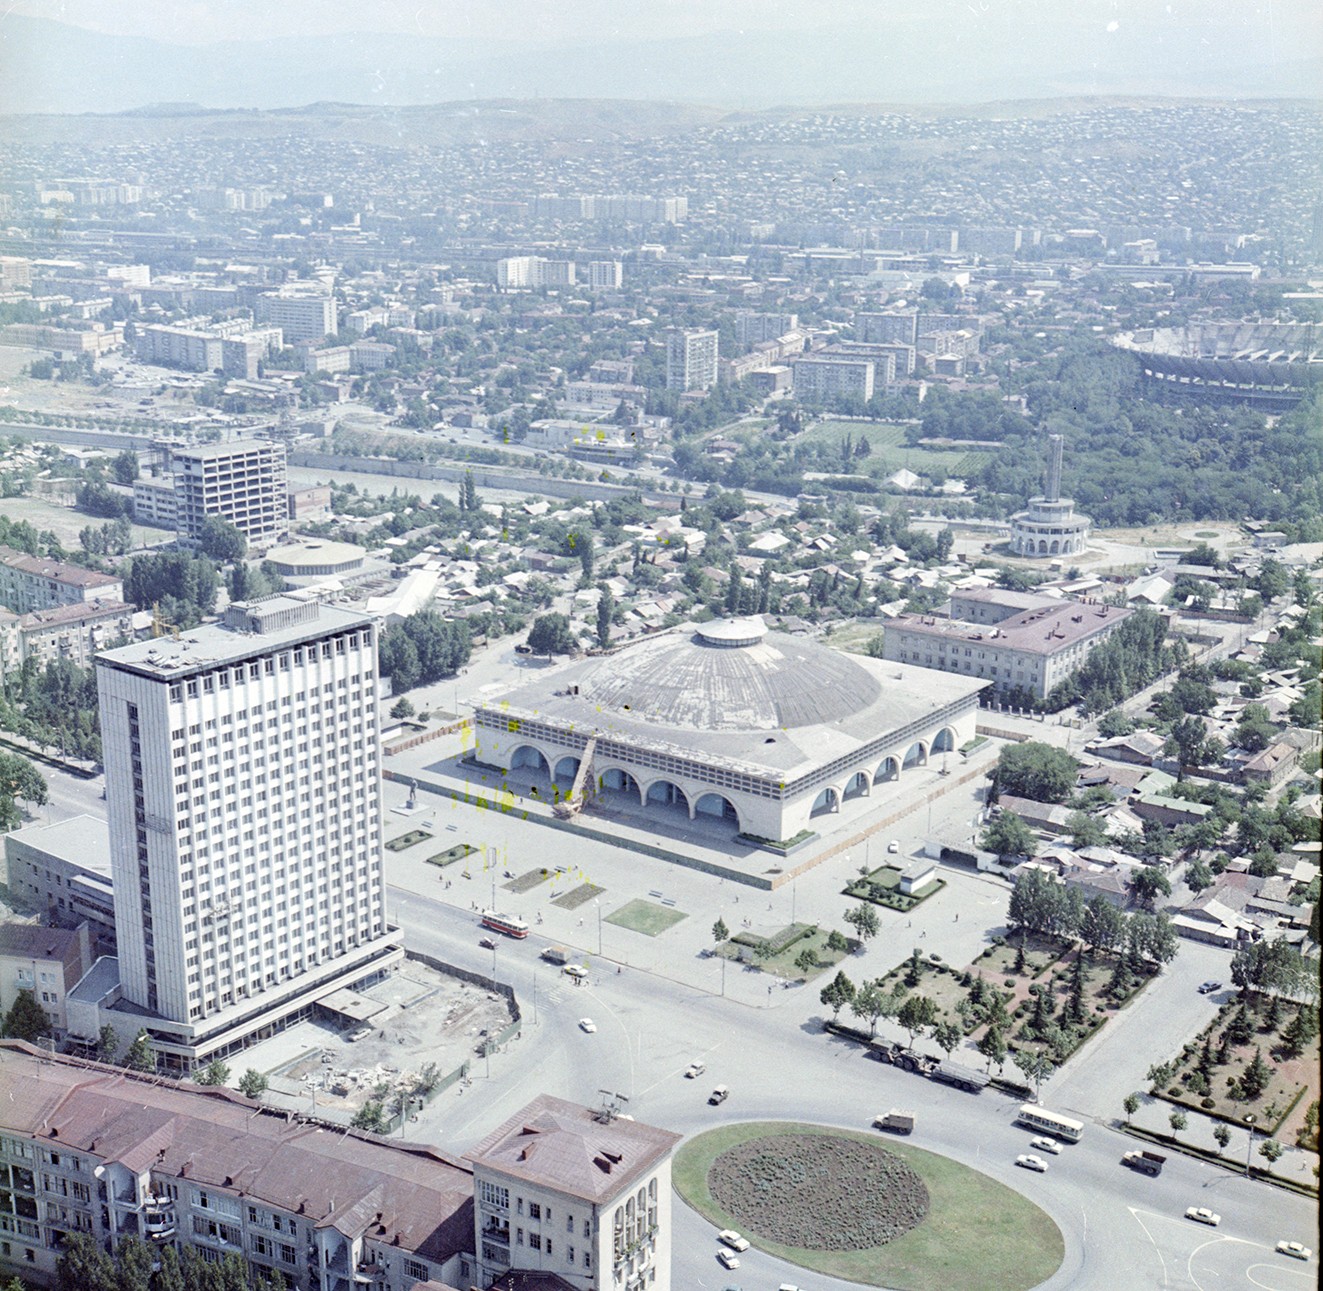 <br> ორჯონიკიძის მოედანი (დღევანდელი 26 მაისის მოედანი), 1975 წელი.
<br> ფოტოს ავტორი ოთარ თურქია.
<br> Orjonikidze Square (today’s 26 May Square), 1975.
<br> Photo by Otar Turkia.